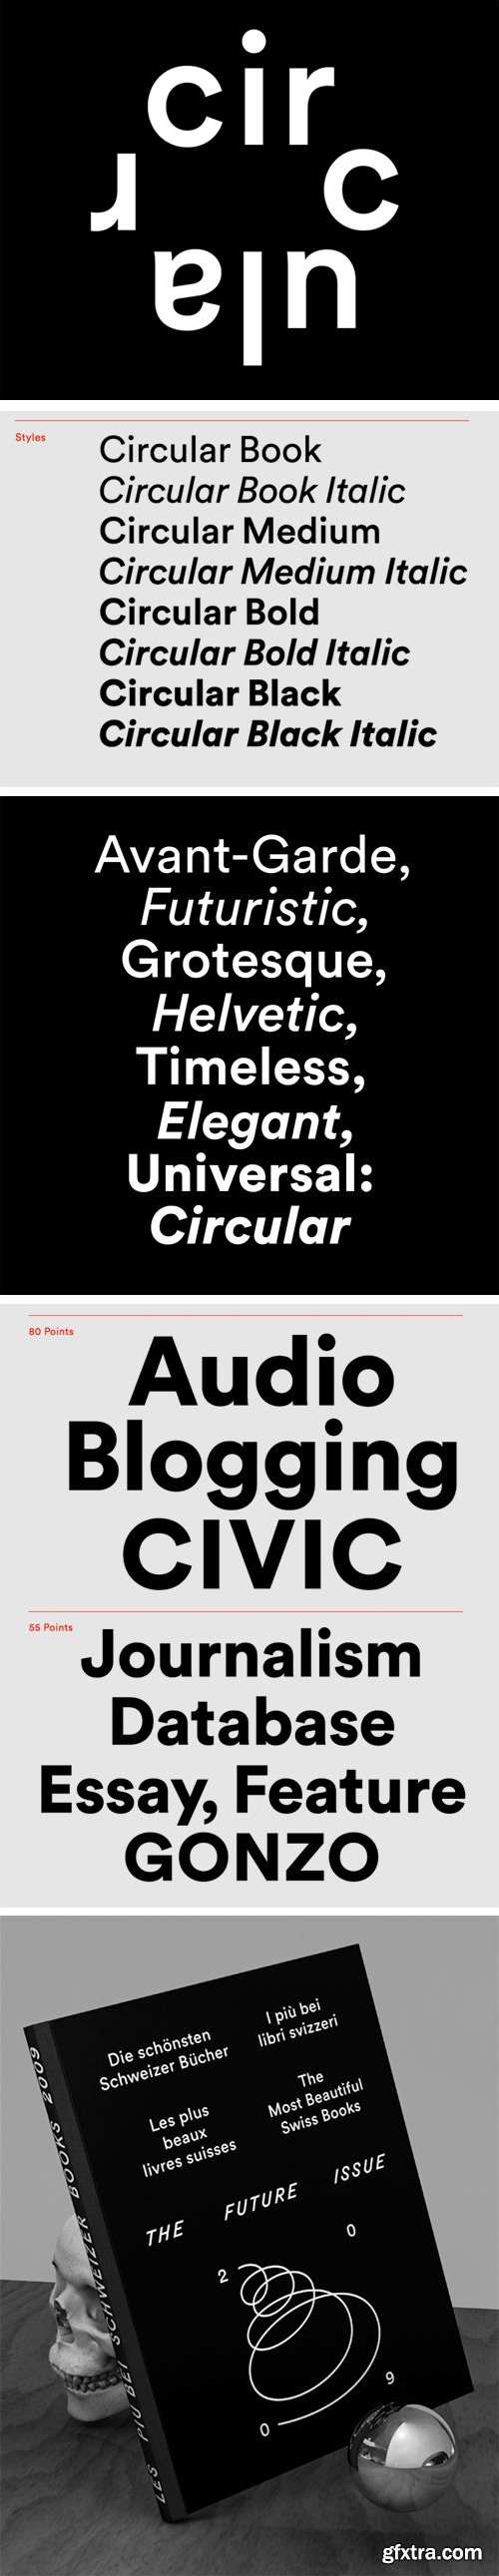 circular font lineto